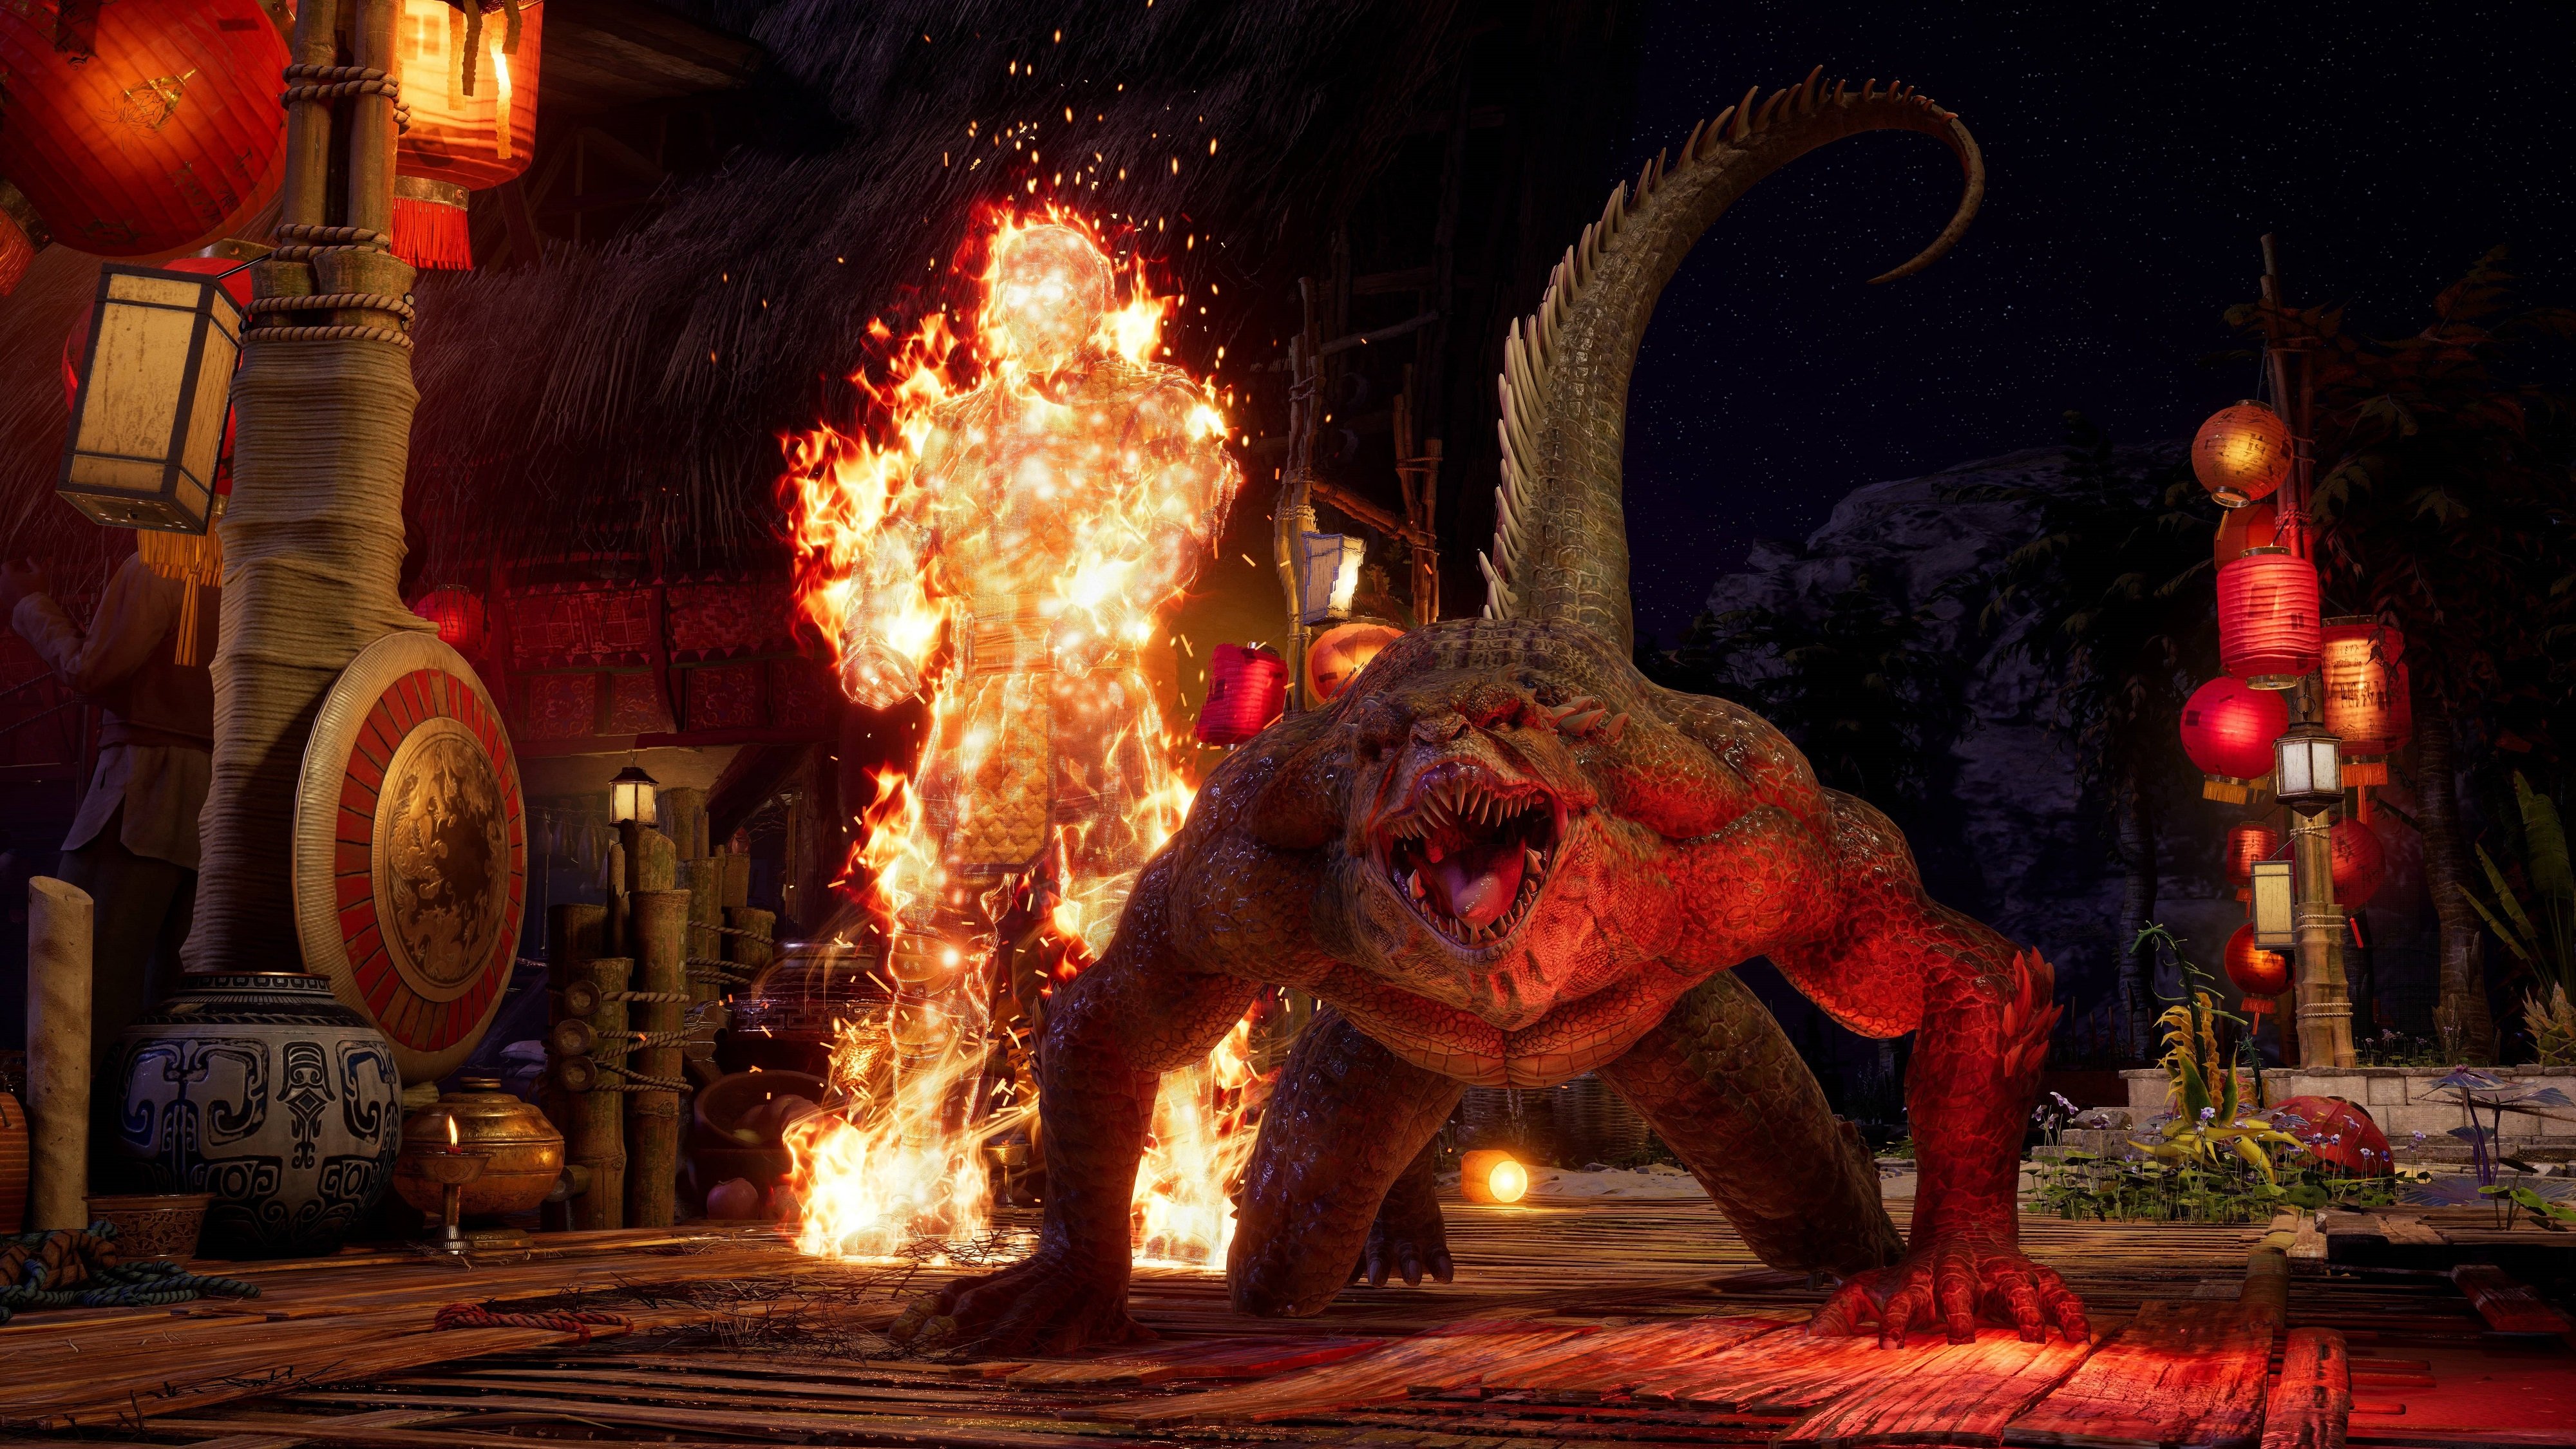 Mortal Kombat 1 - Вторжение - Прохождение на русском на PC в 4K